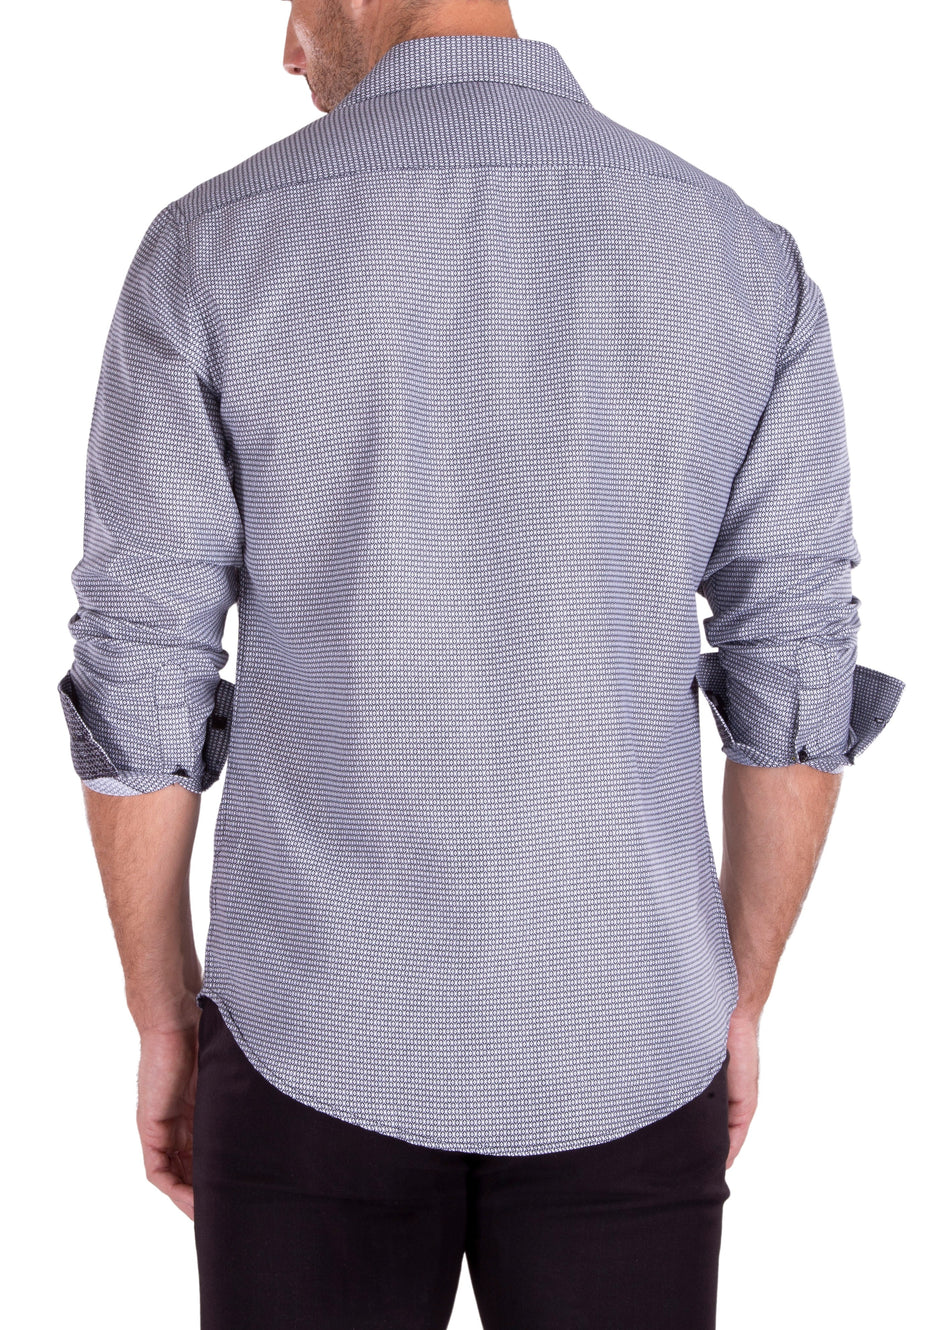 212387 - Black Long Sleeve Shirt